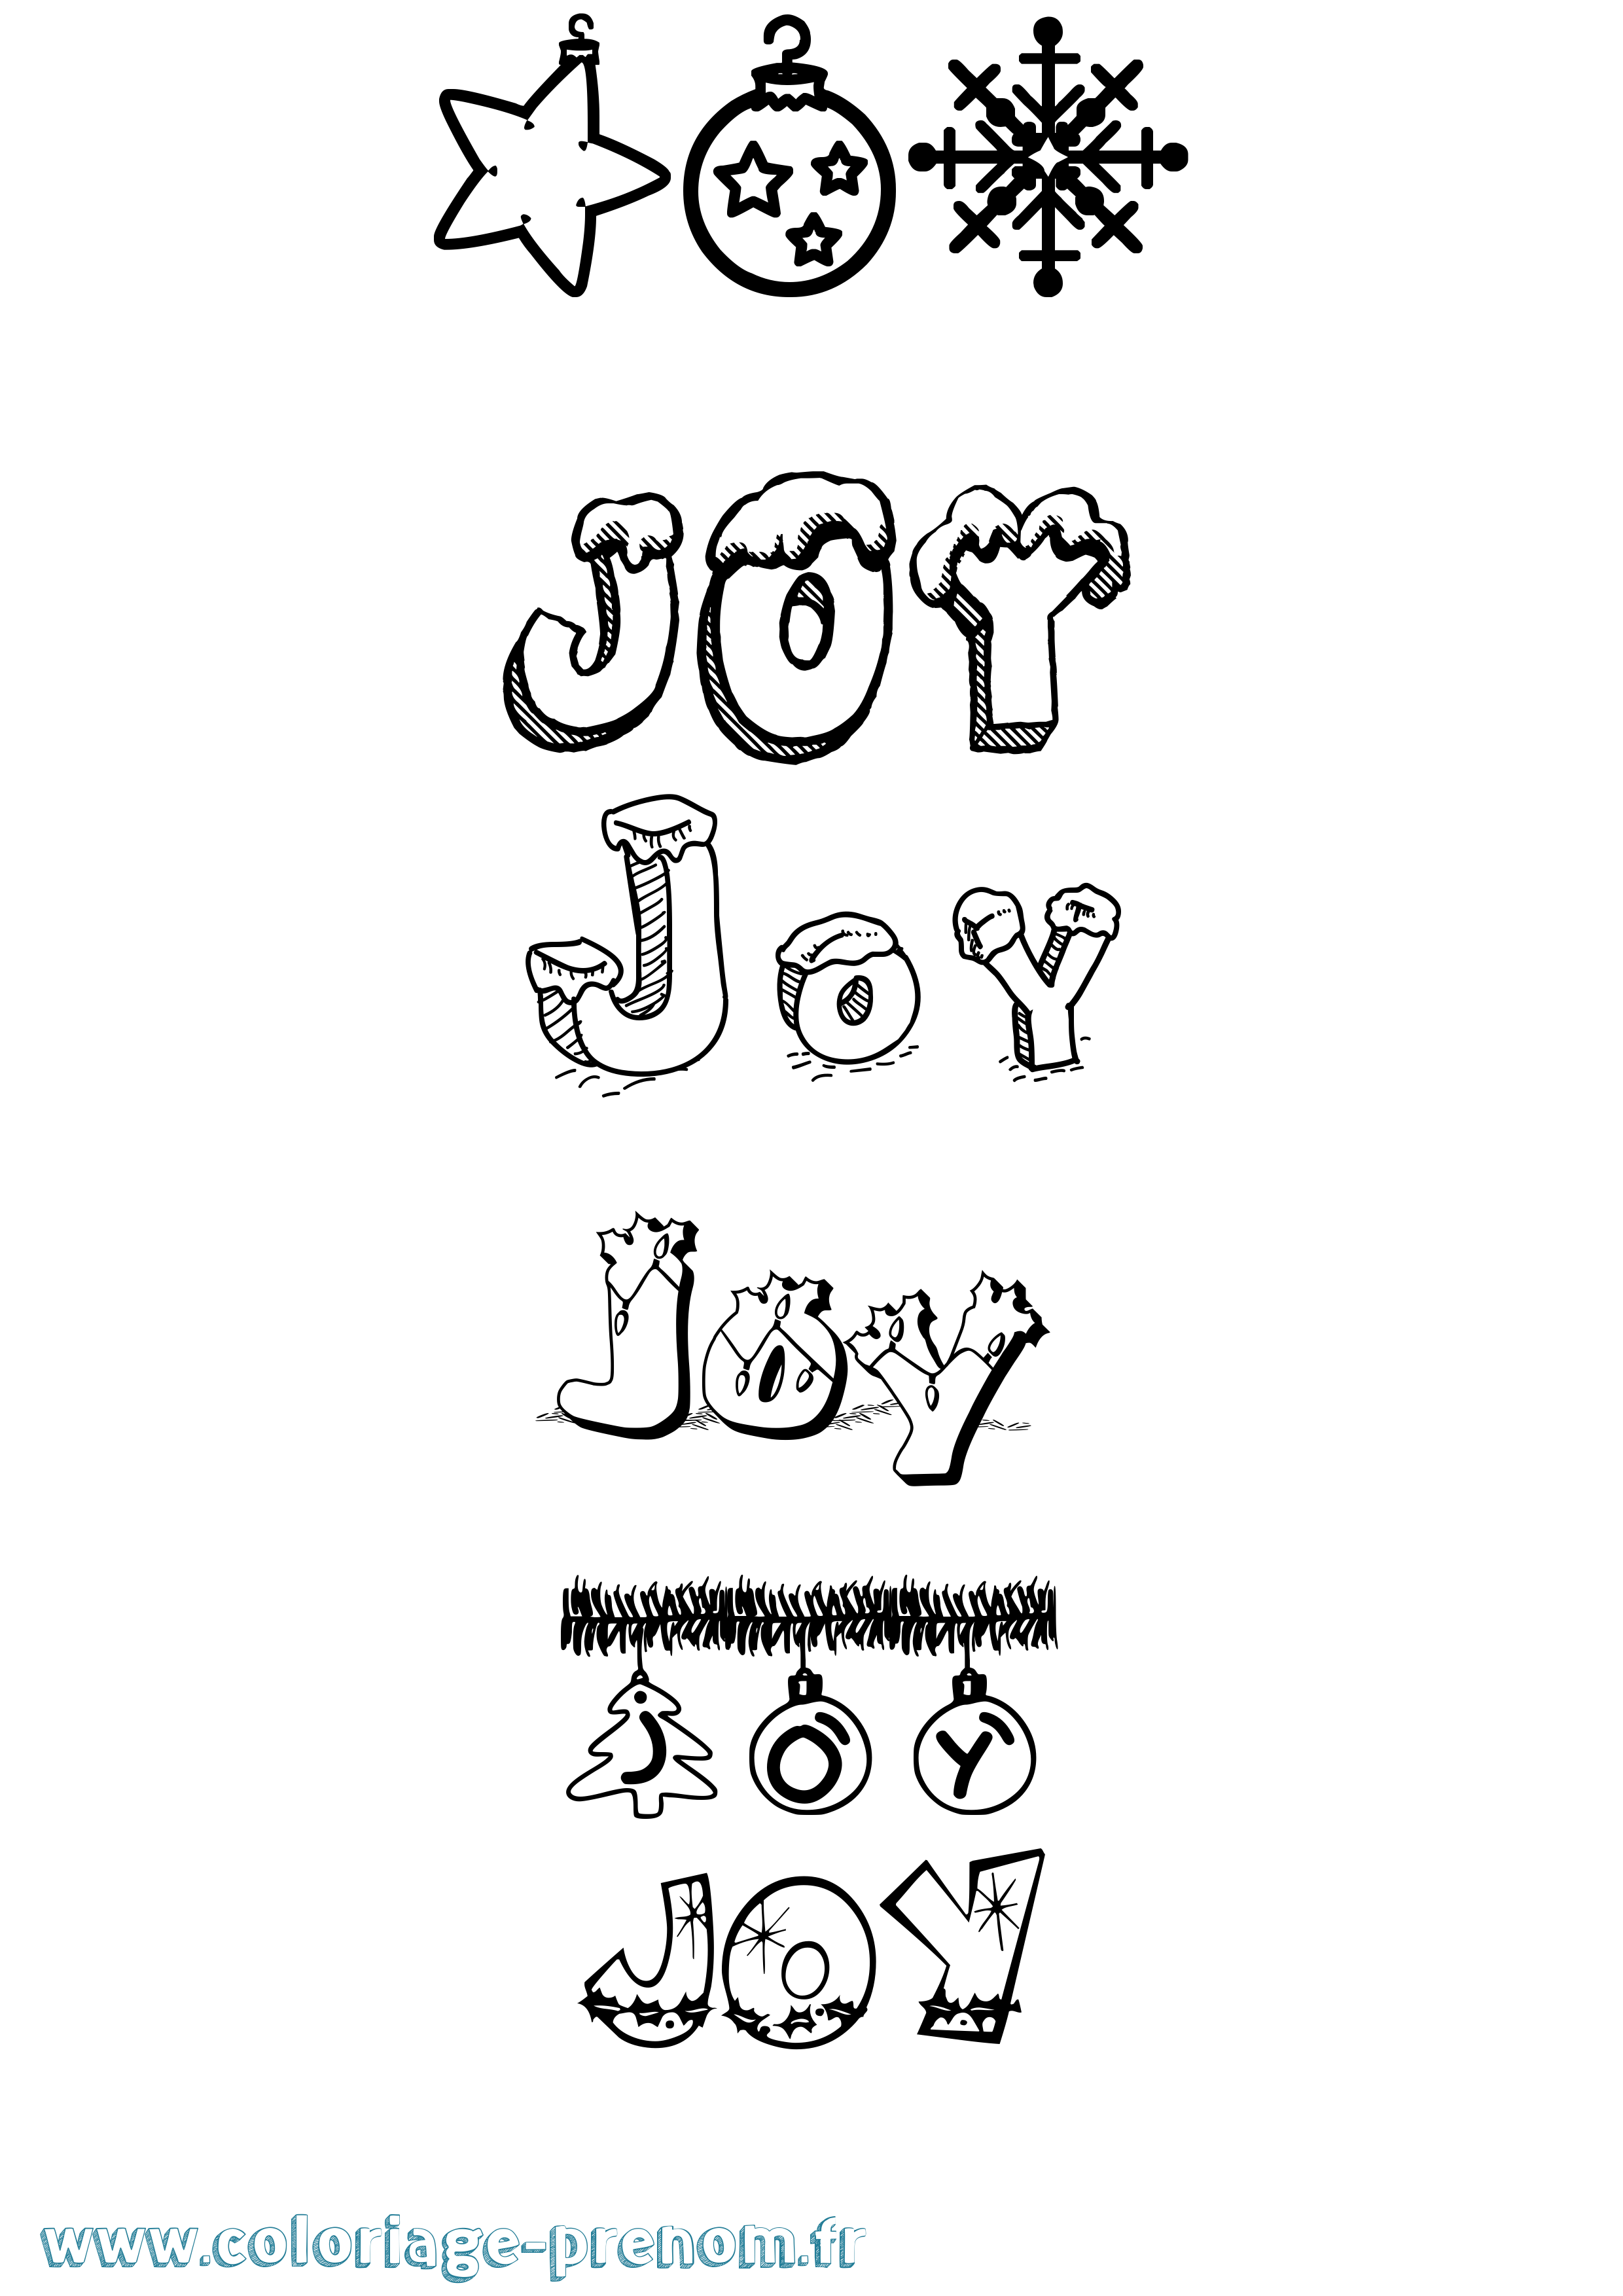 Coloriage prénom Joy